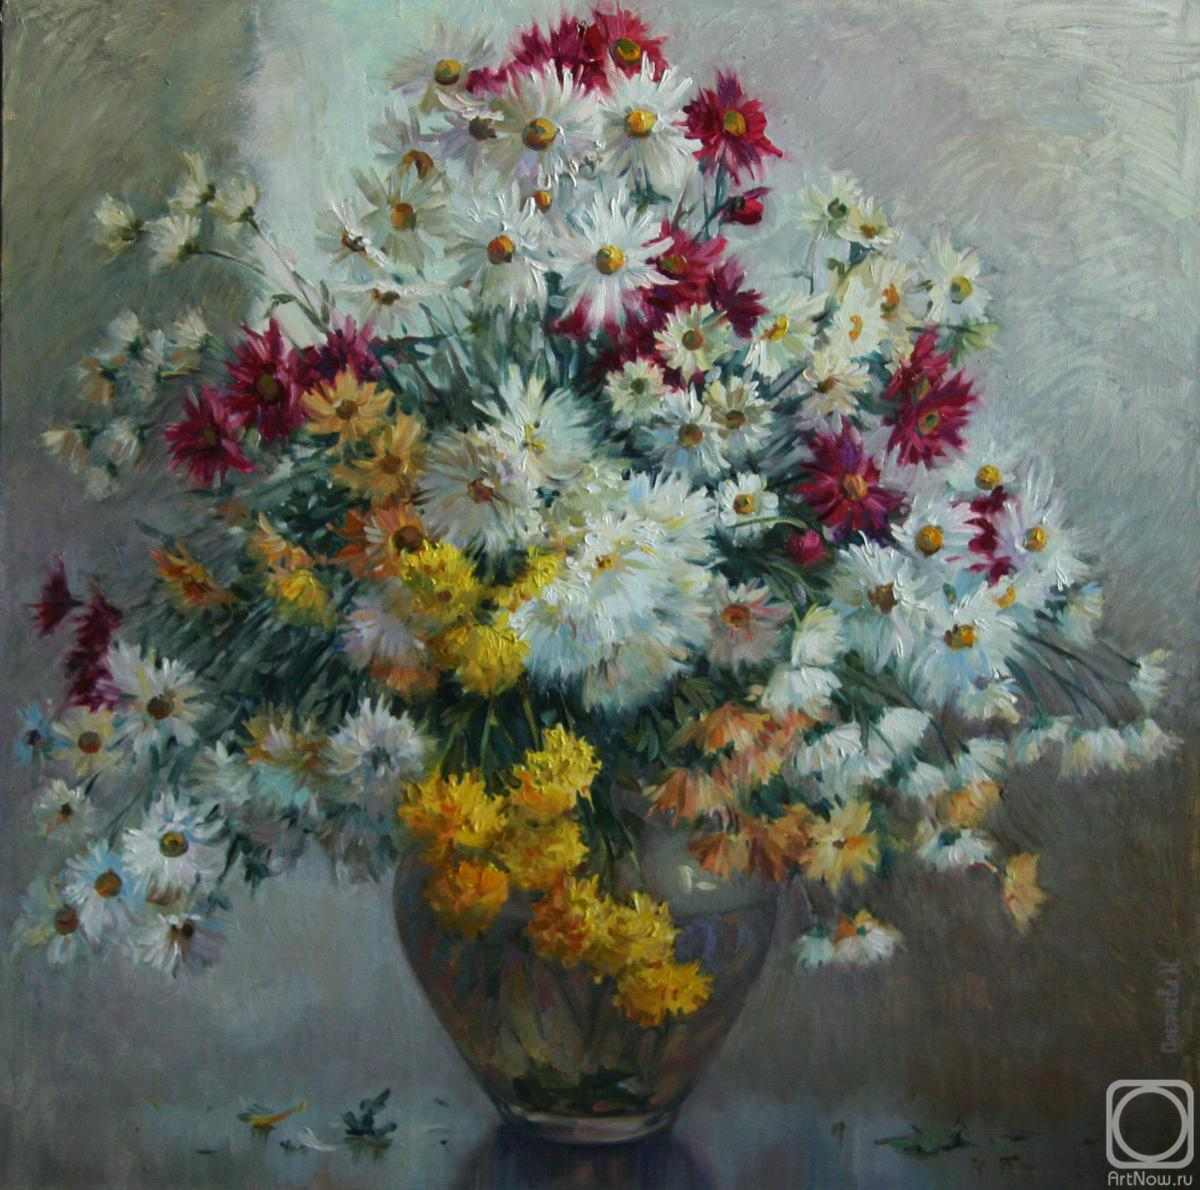 Pletneva Irina. White bouquet